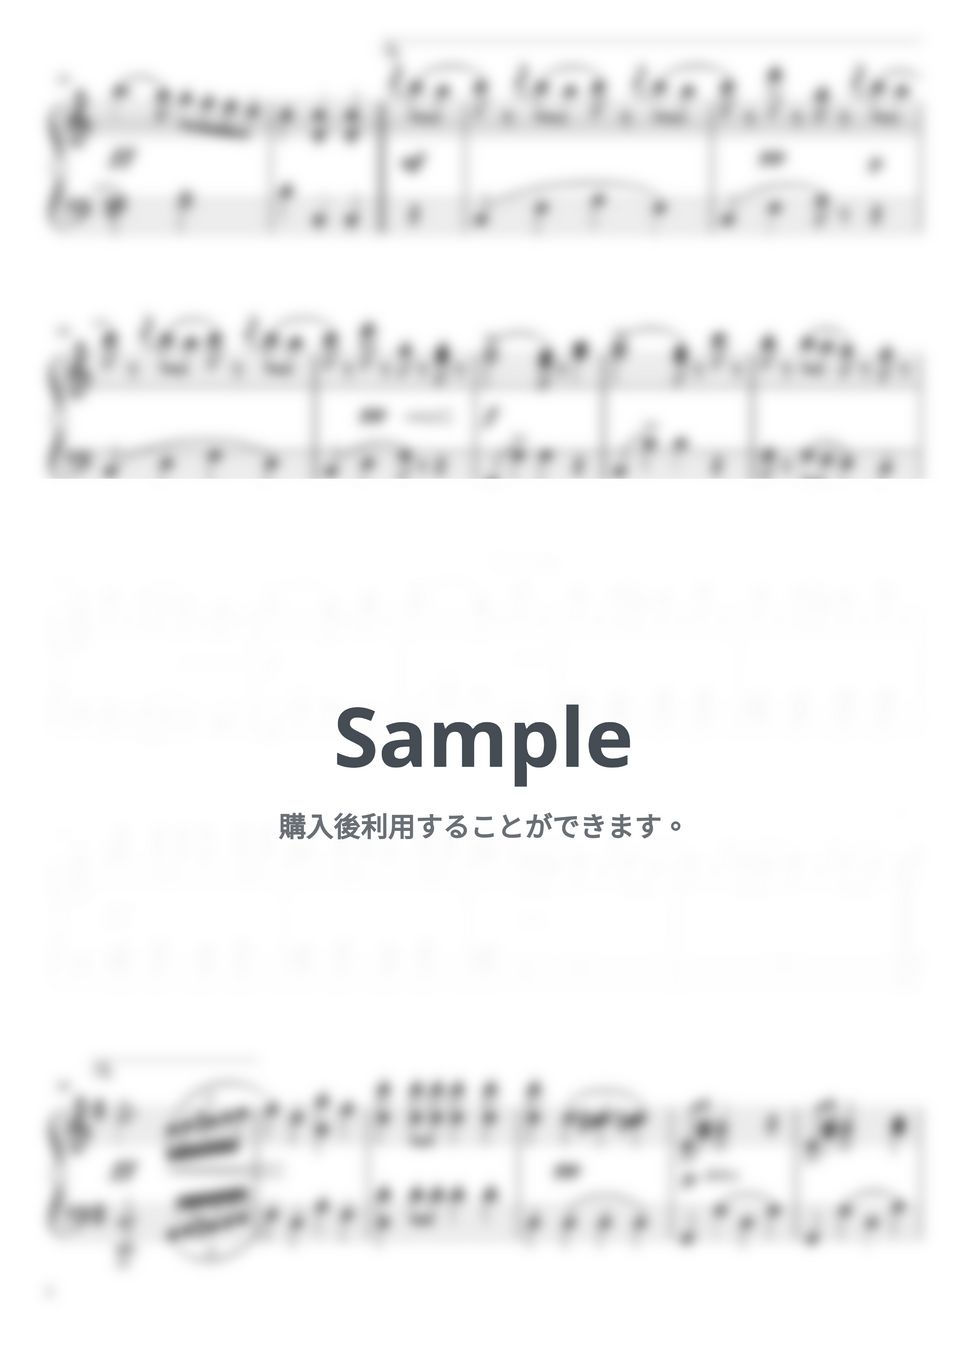 J.B.シュトラウス - ラデッキー行進曲 (C・ピアノソロ初中級) by pfkaori